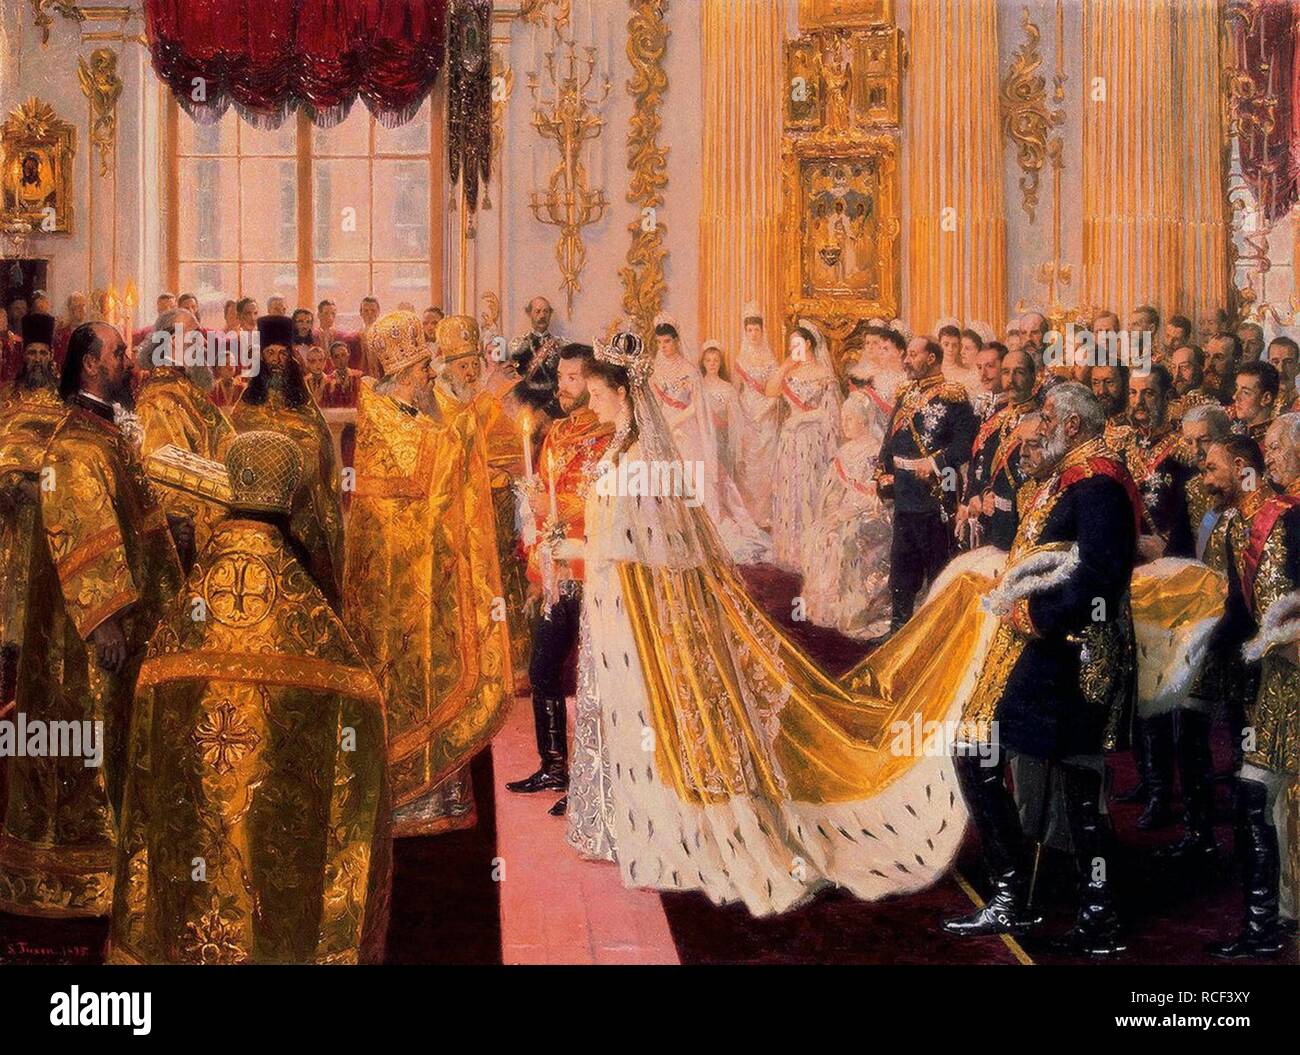 The wedding of Tsar Nicholas II and the Princess Alix of Hesse